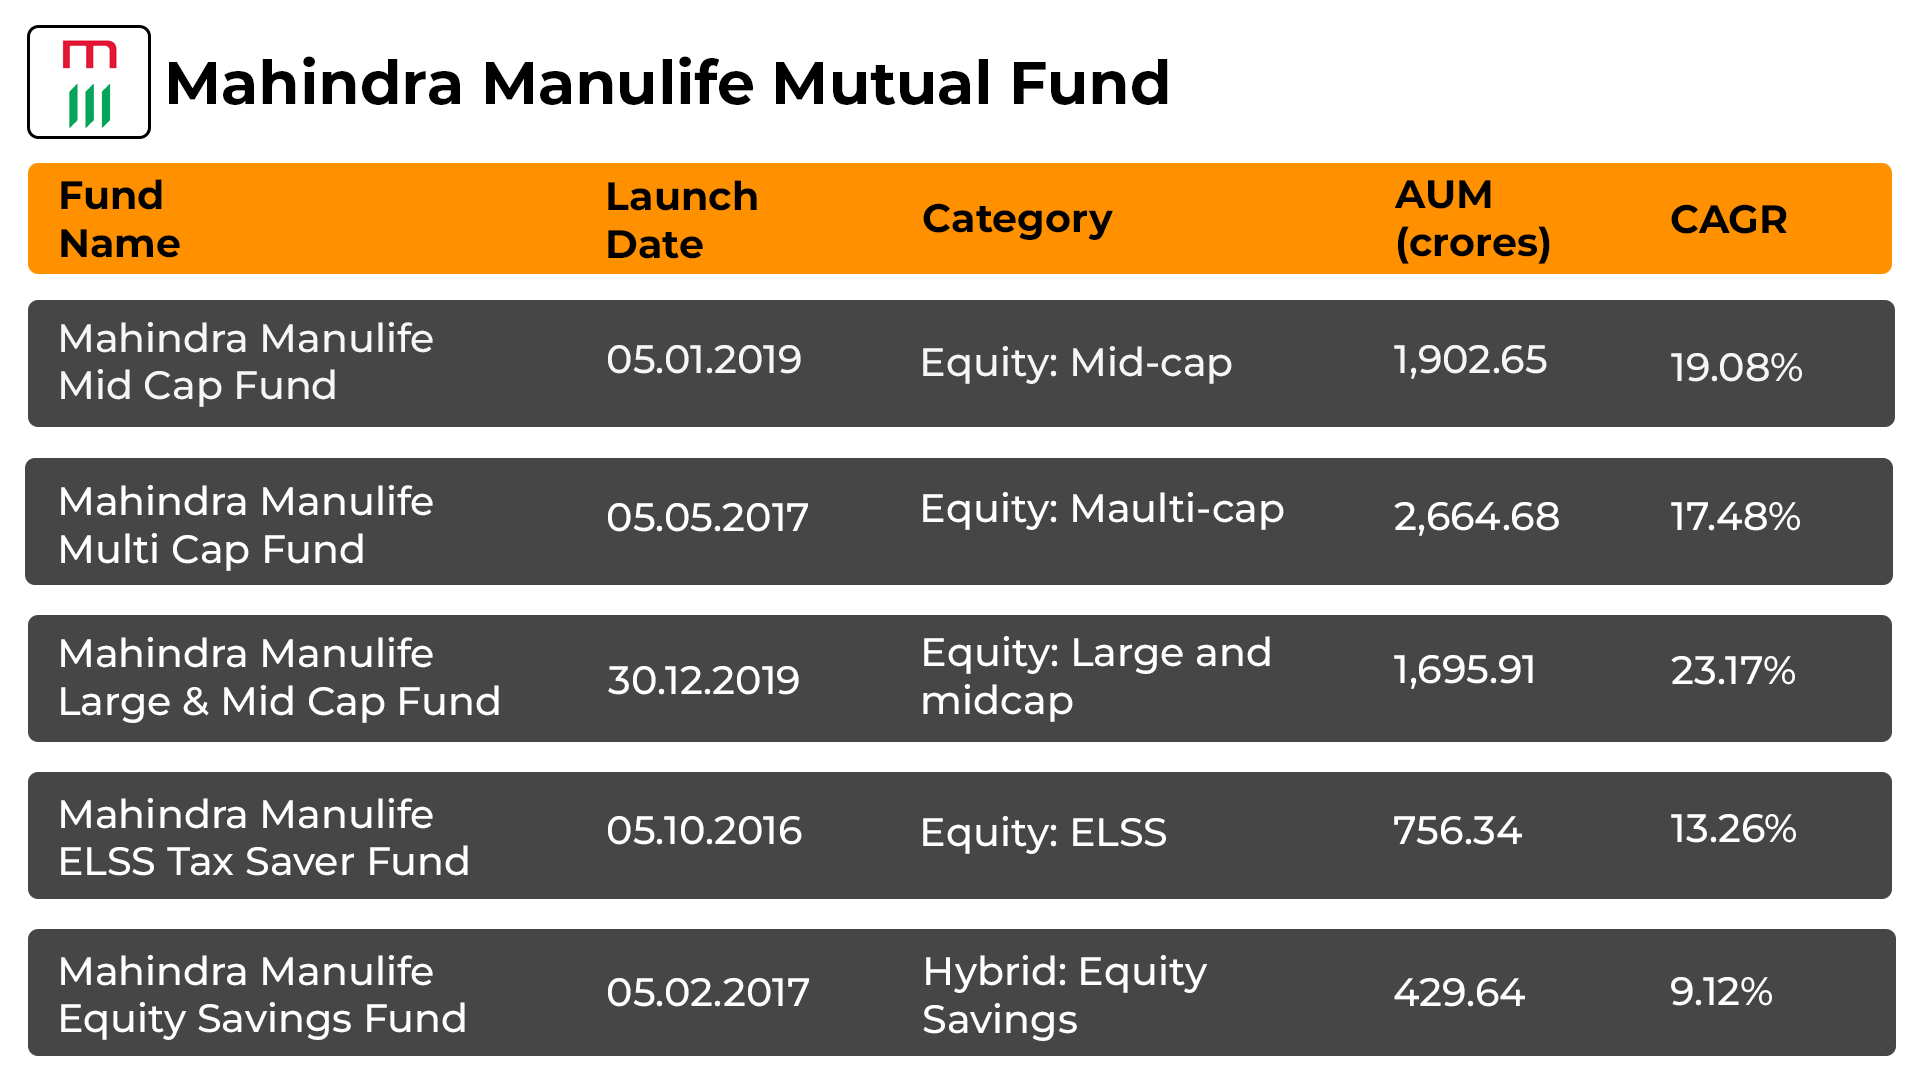 Top 5 Mahindra Manulife Mutual Funds